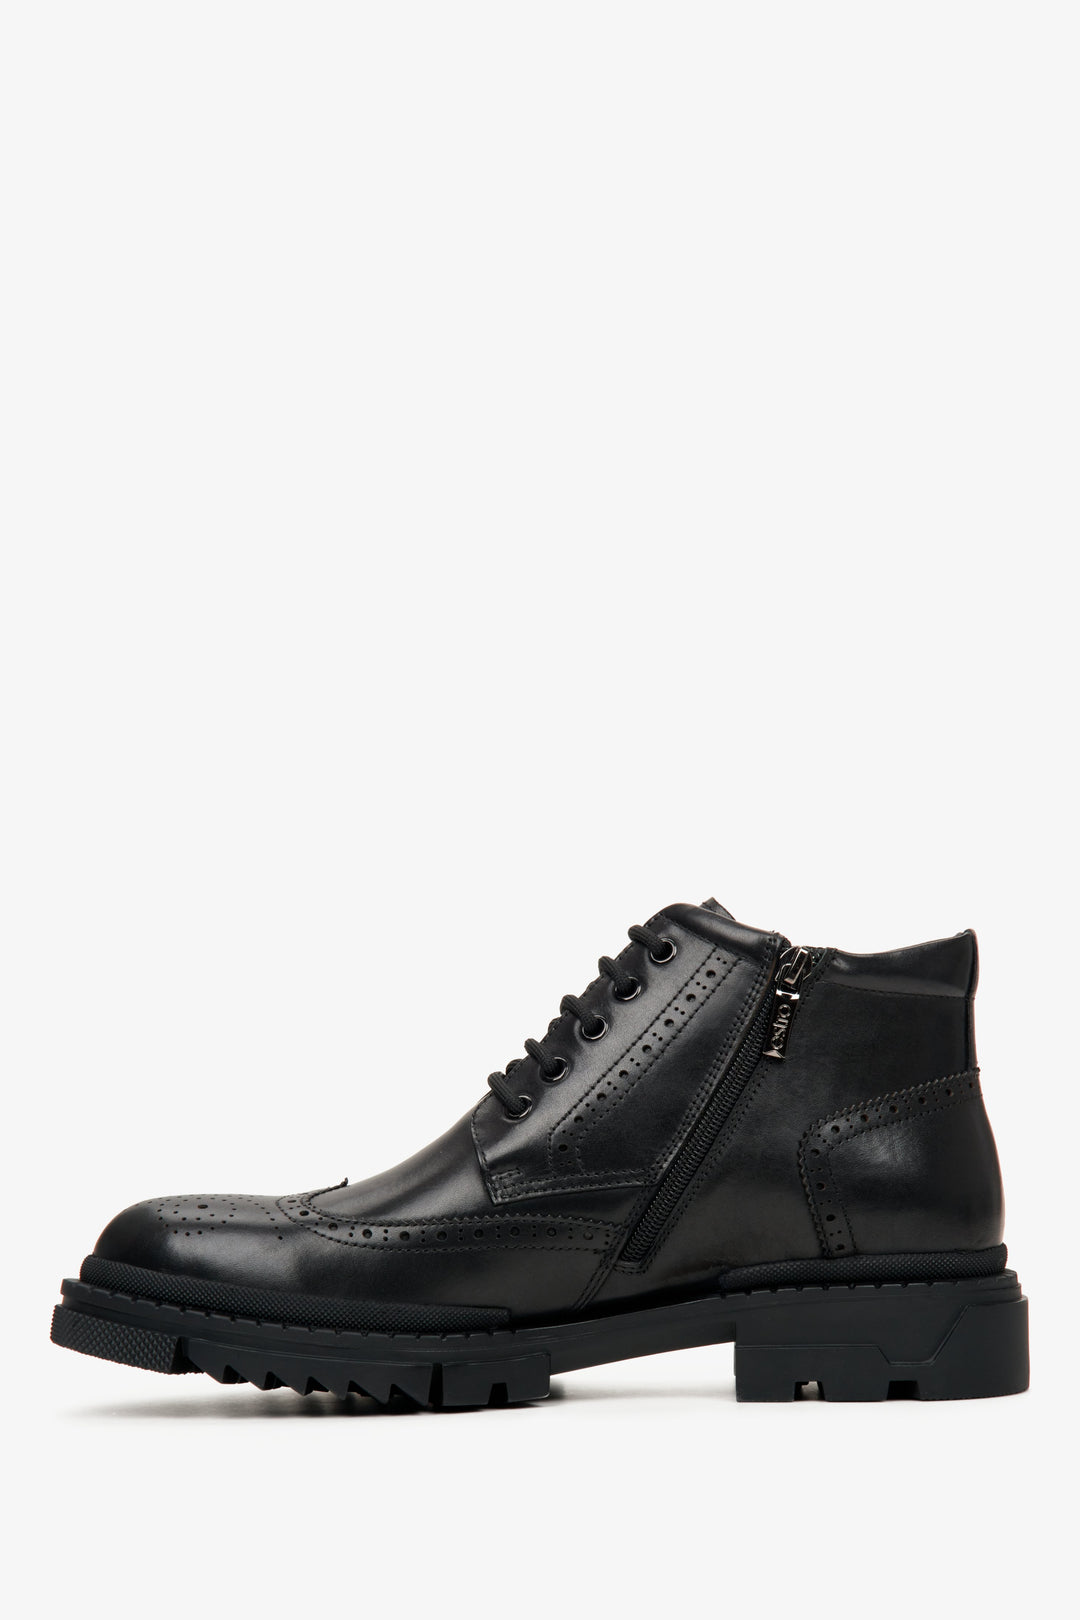 Elevated, men's black winter boots by Estro - shoe profile.